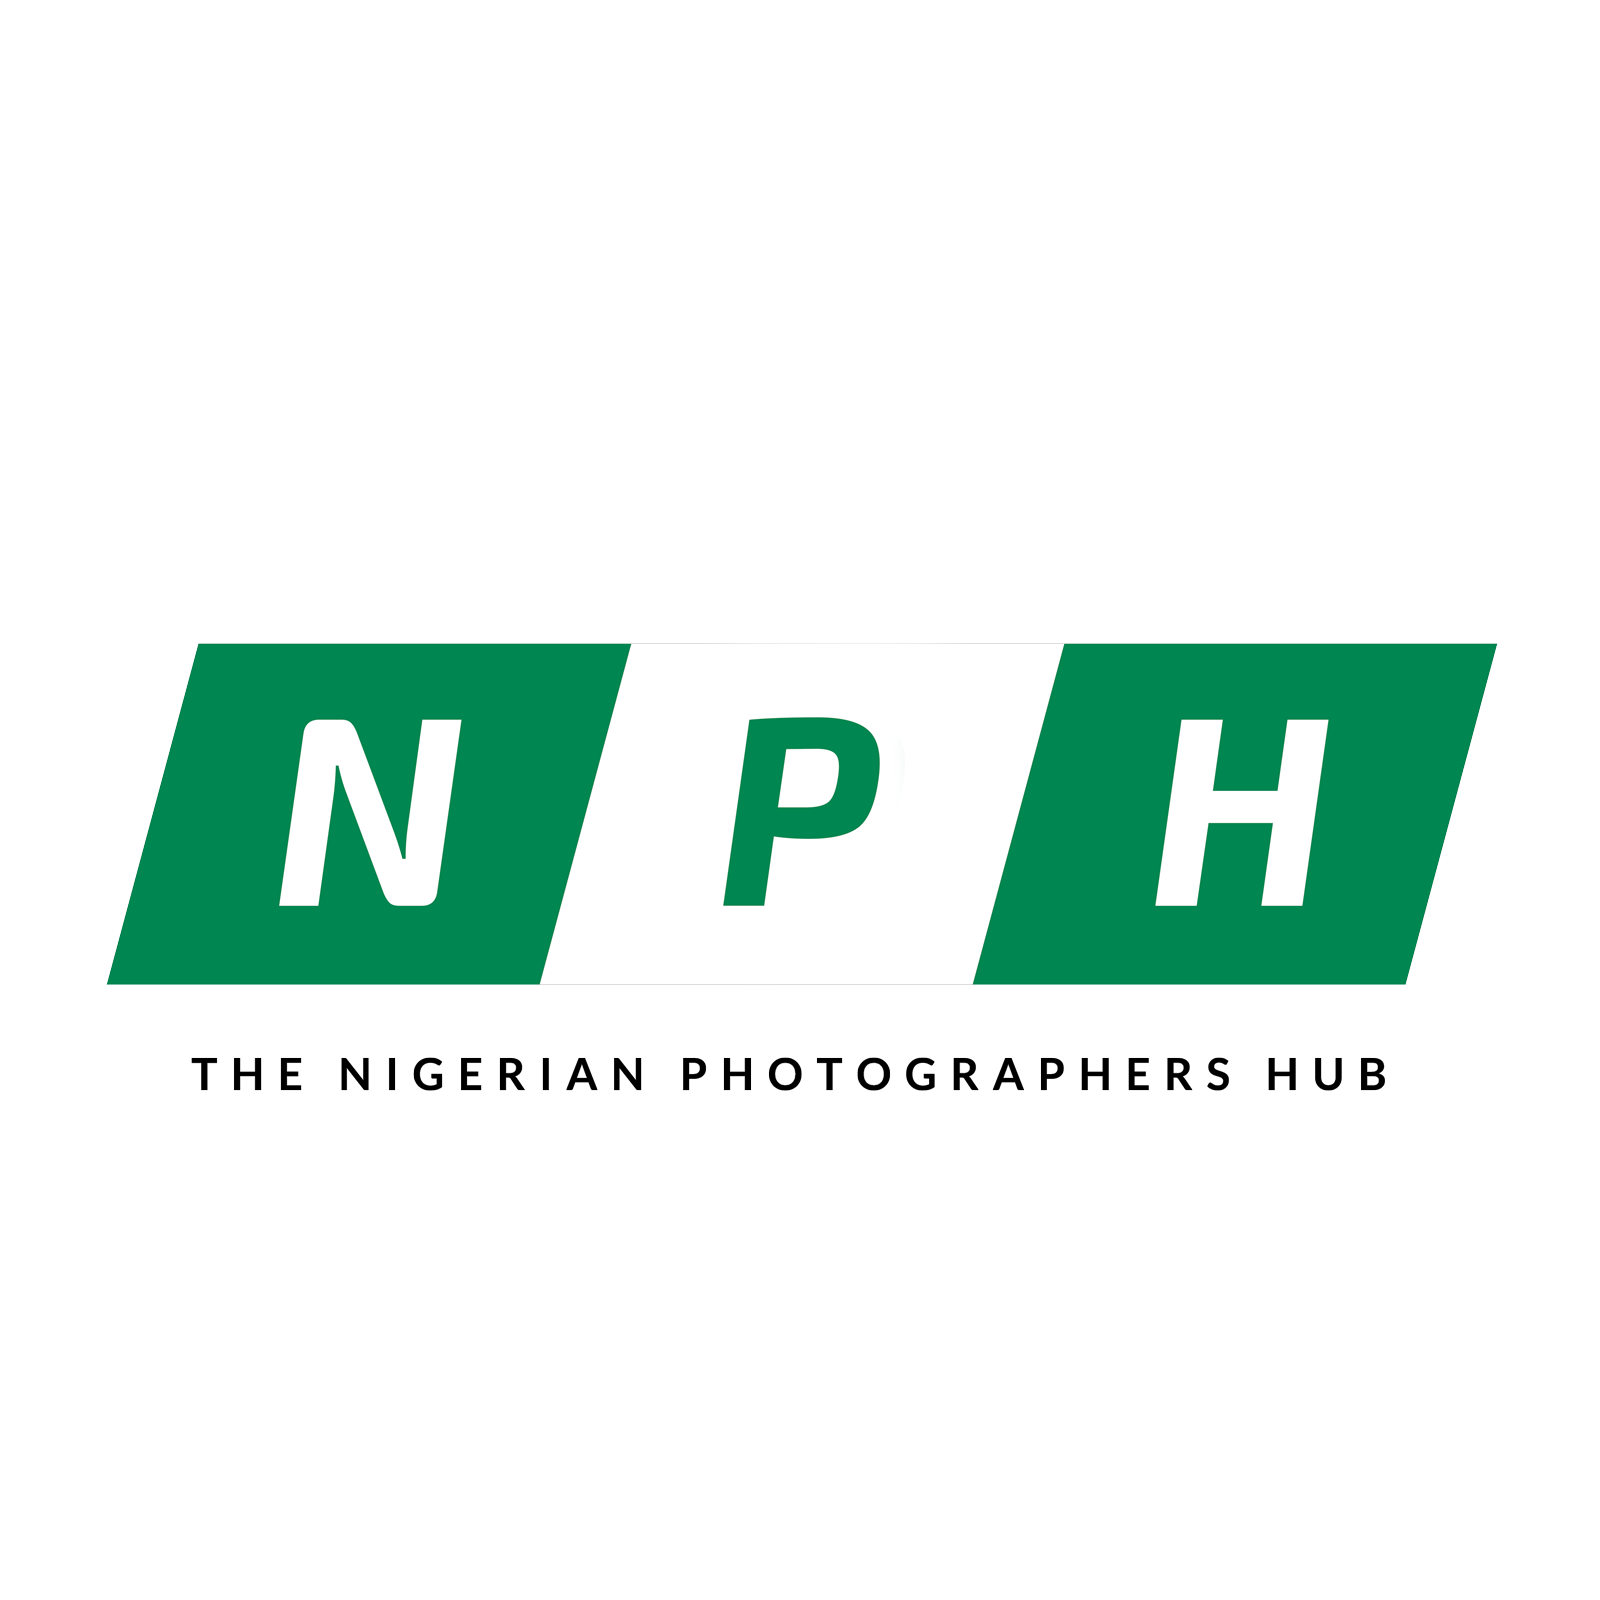 Here for Nigerian Photographers | Nigerian Photographers Hub (N.P.H.)